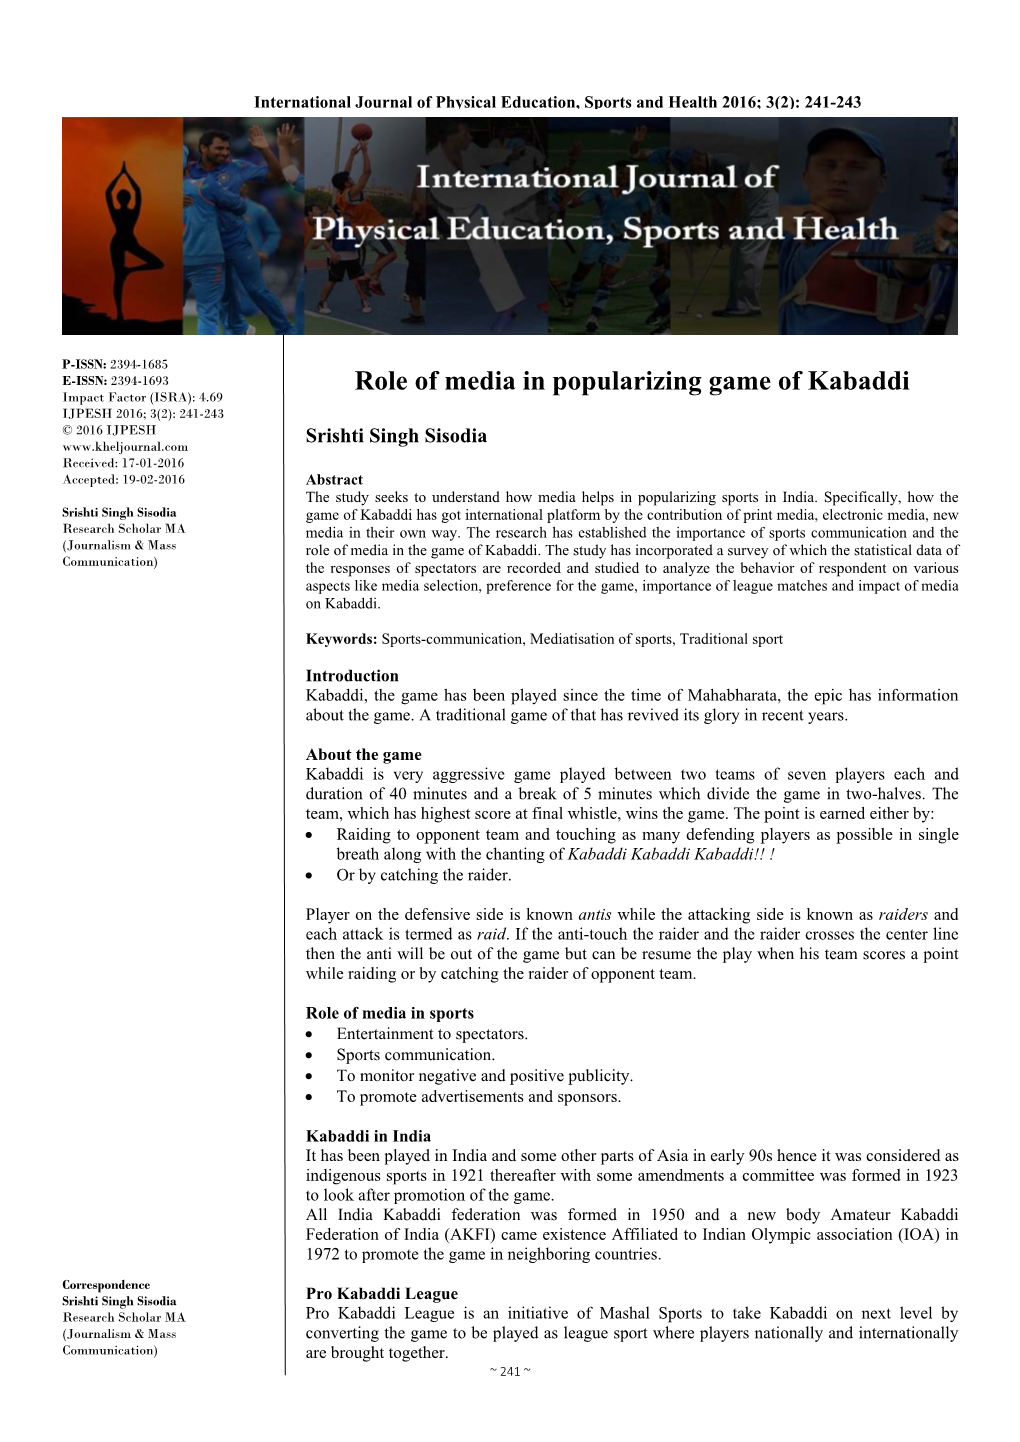 Role of Media in Popularizing Game of Kabaddi